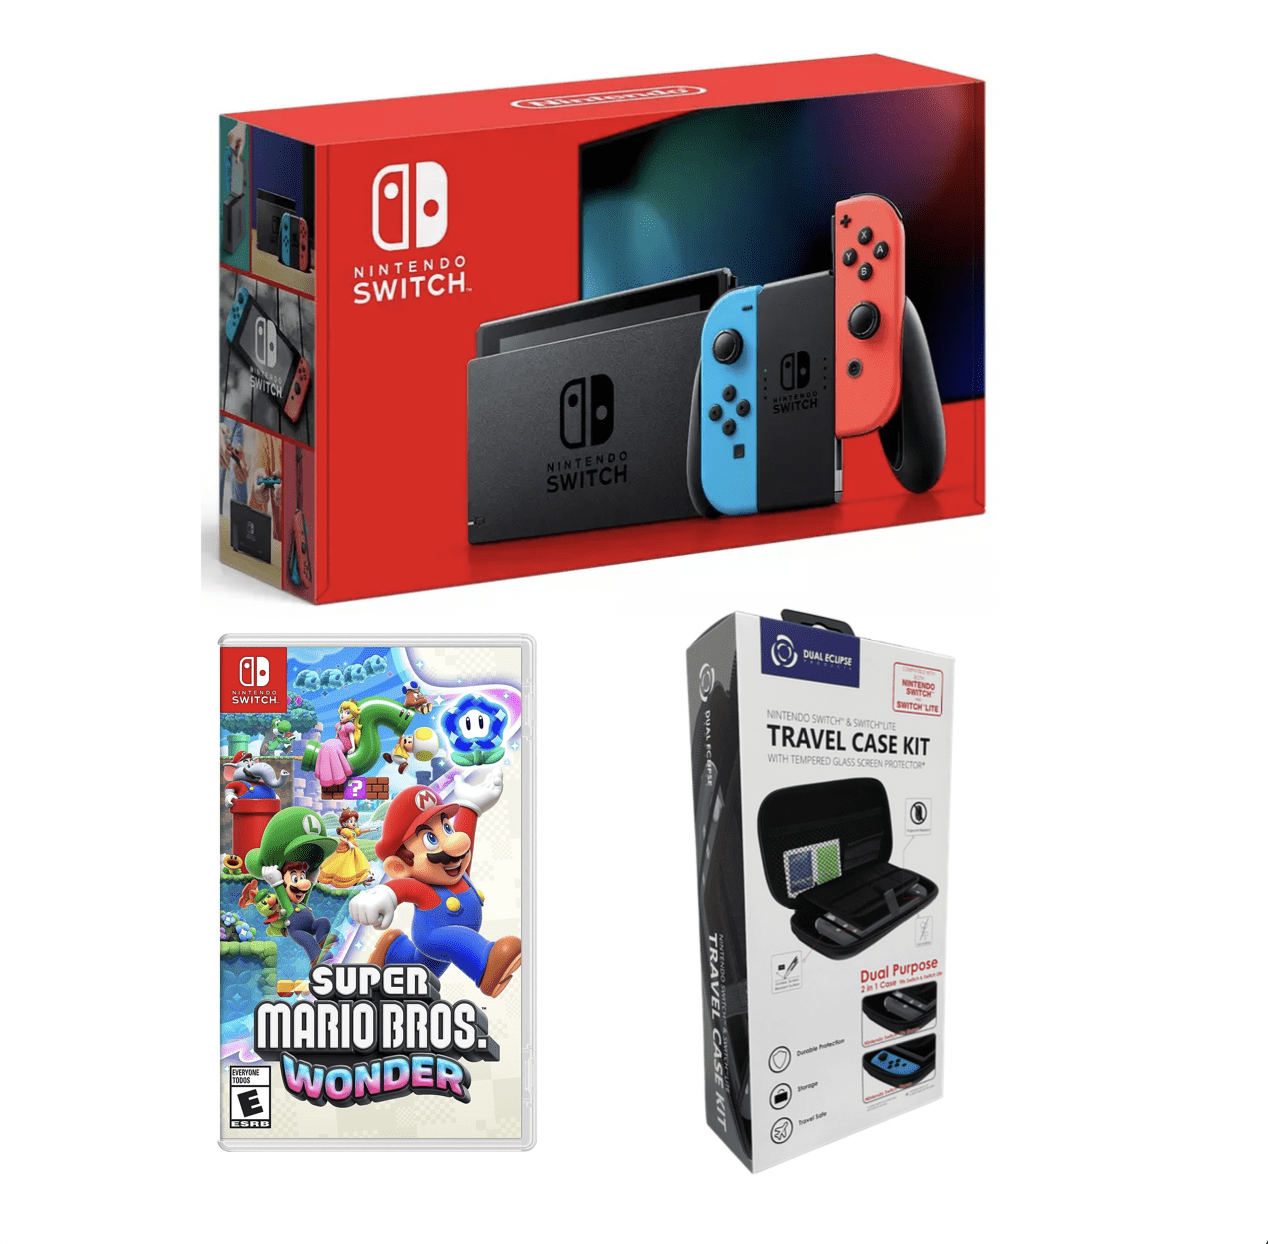 Super Mario Bros. Wonder - Nintendo Switch - U.S. Edition 